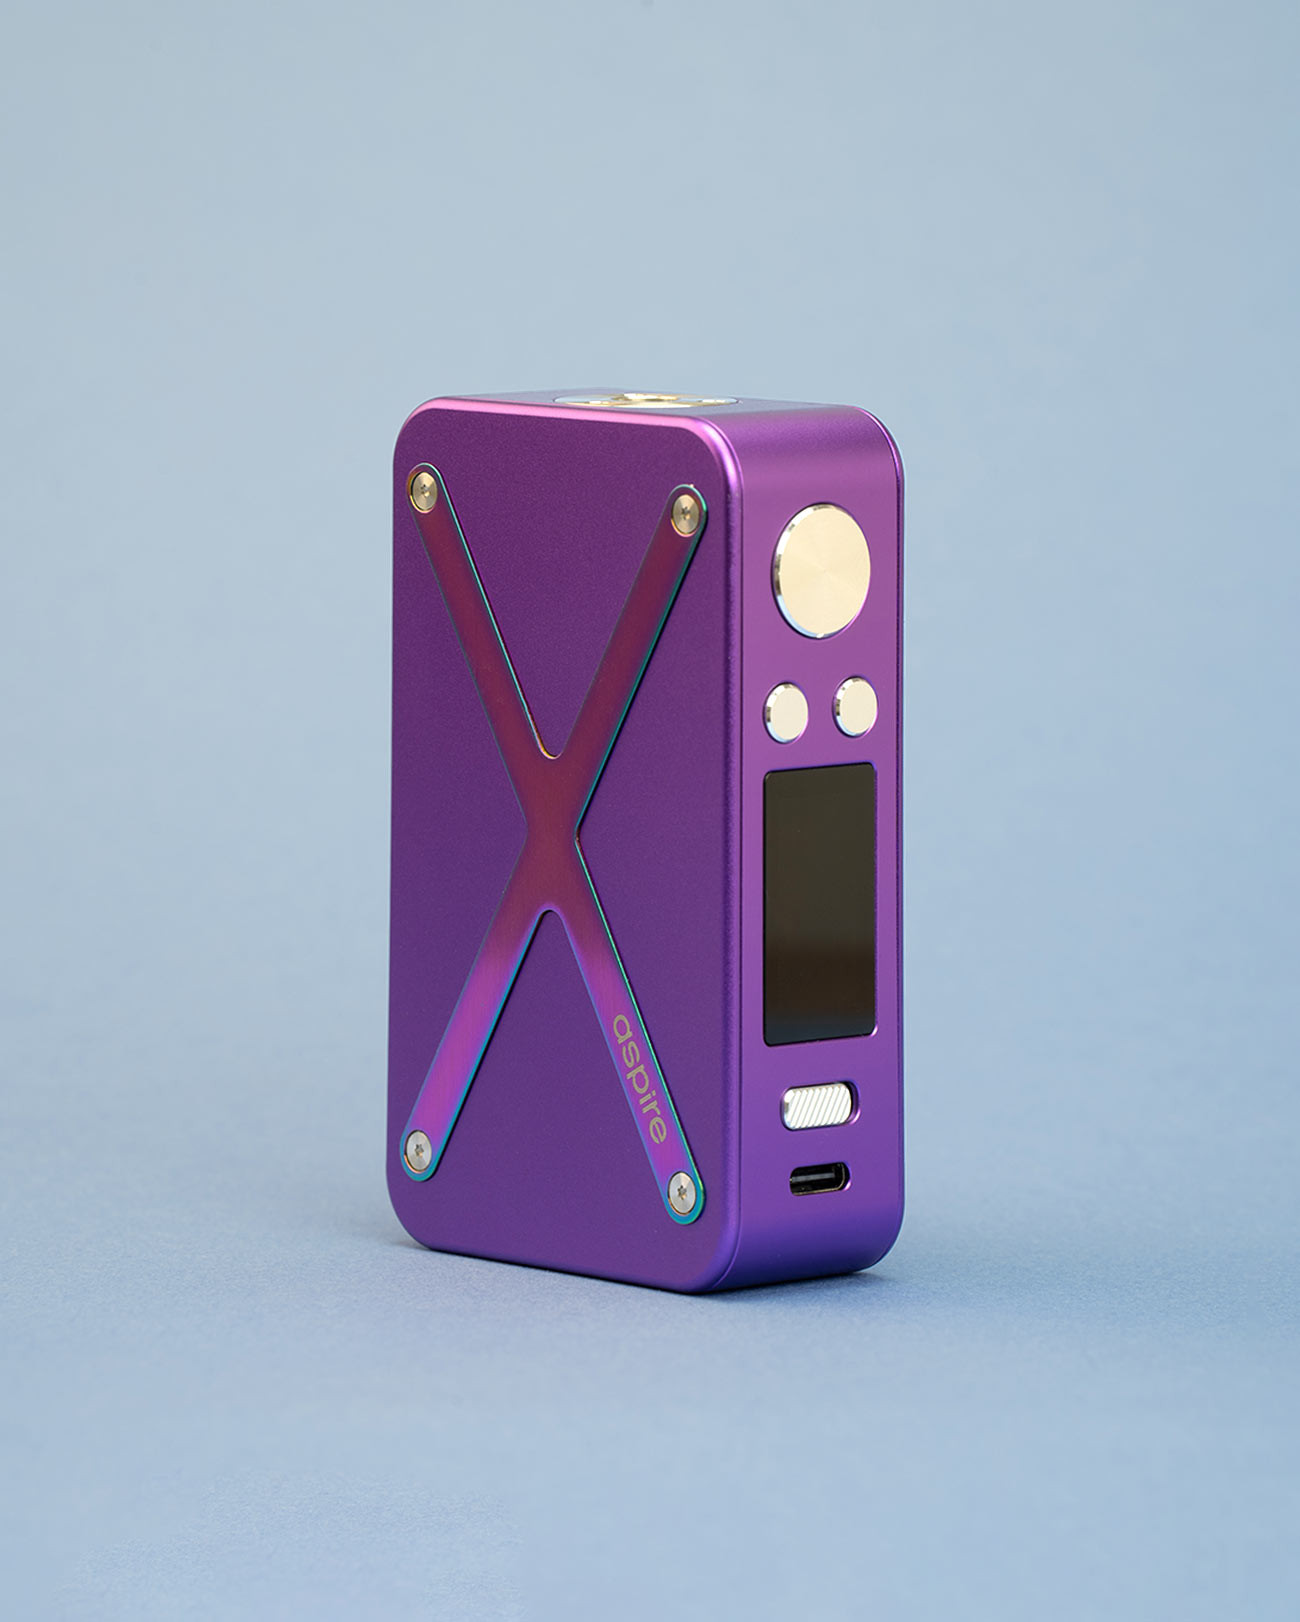 Aspire Box Revolto Purple Rainbow violette imposante et performante